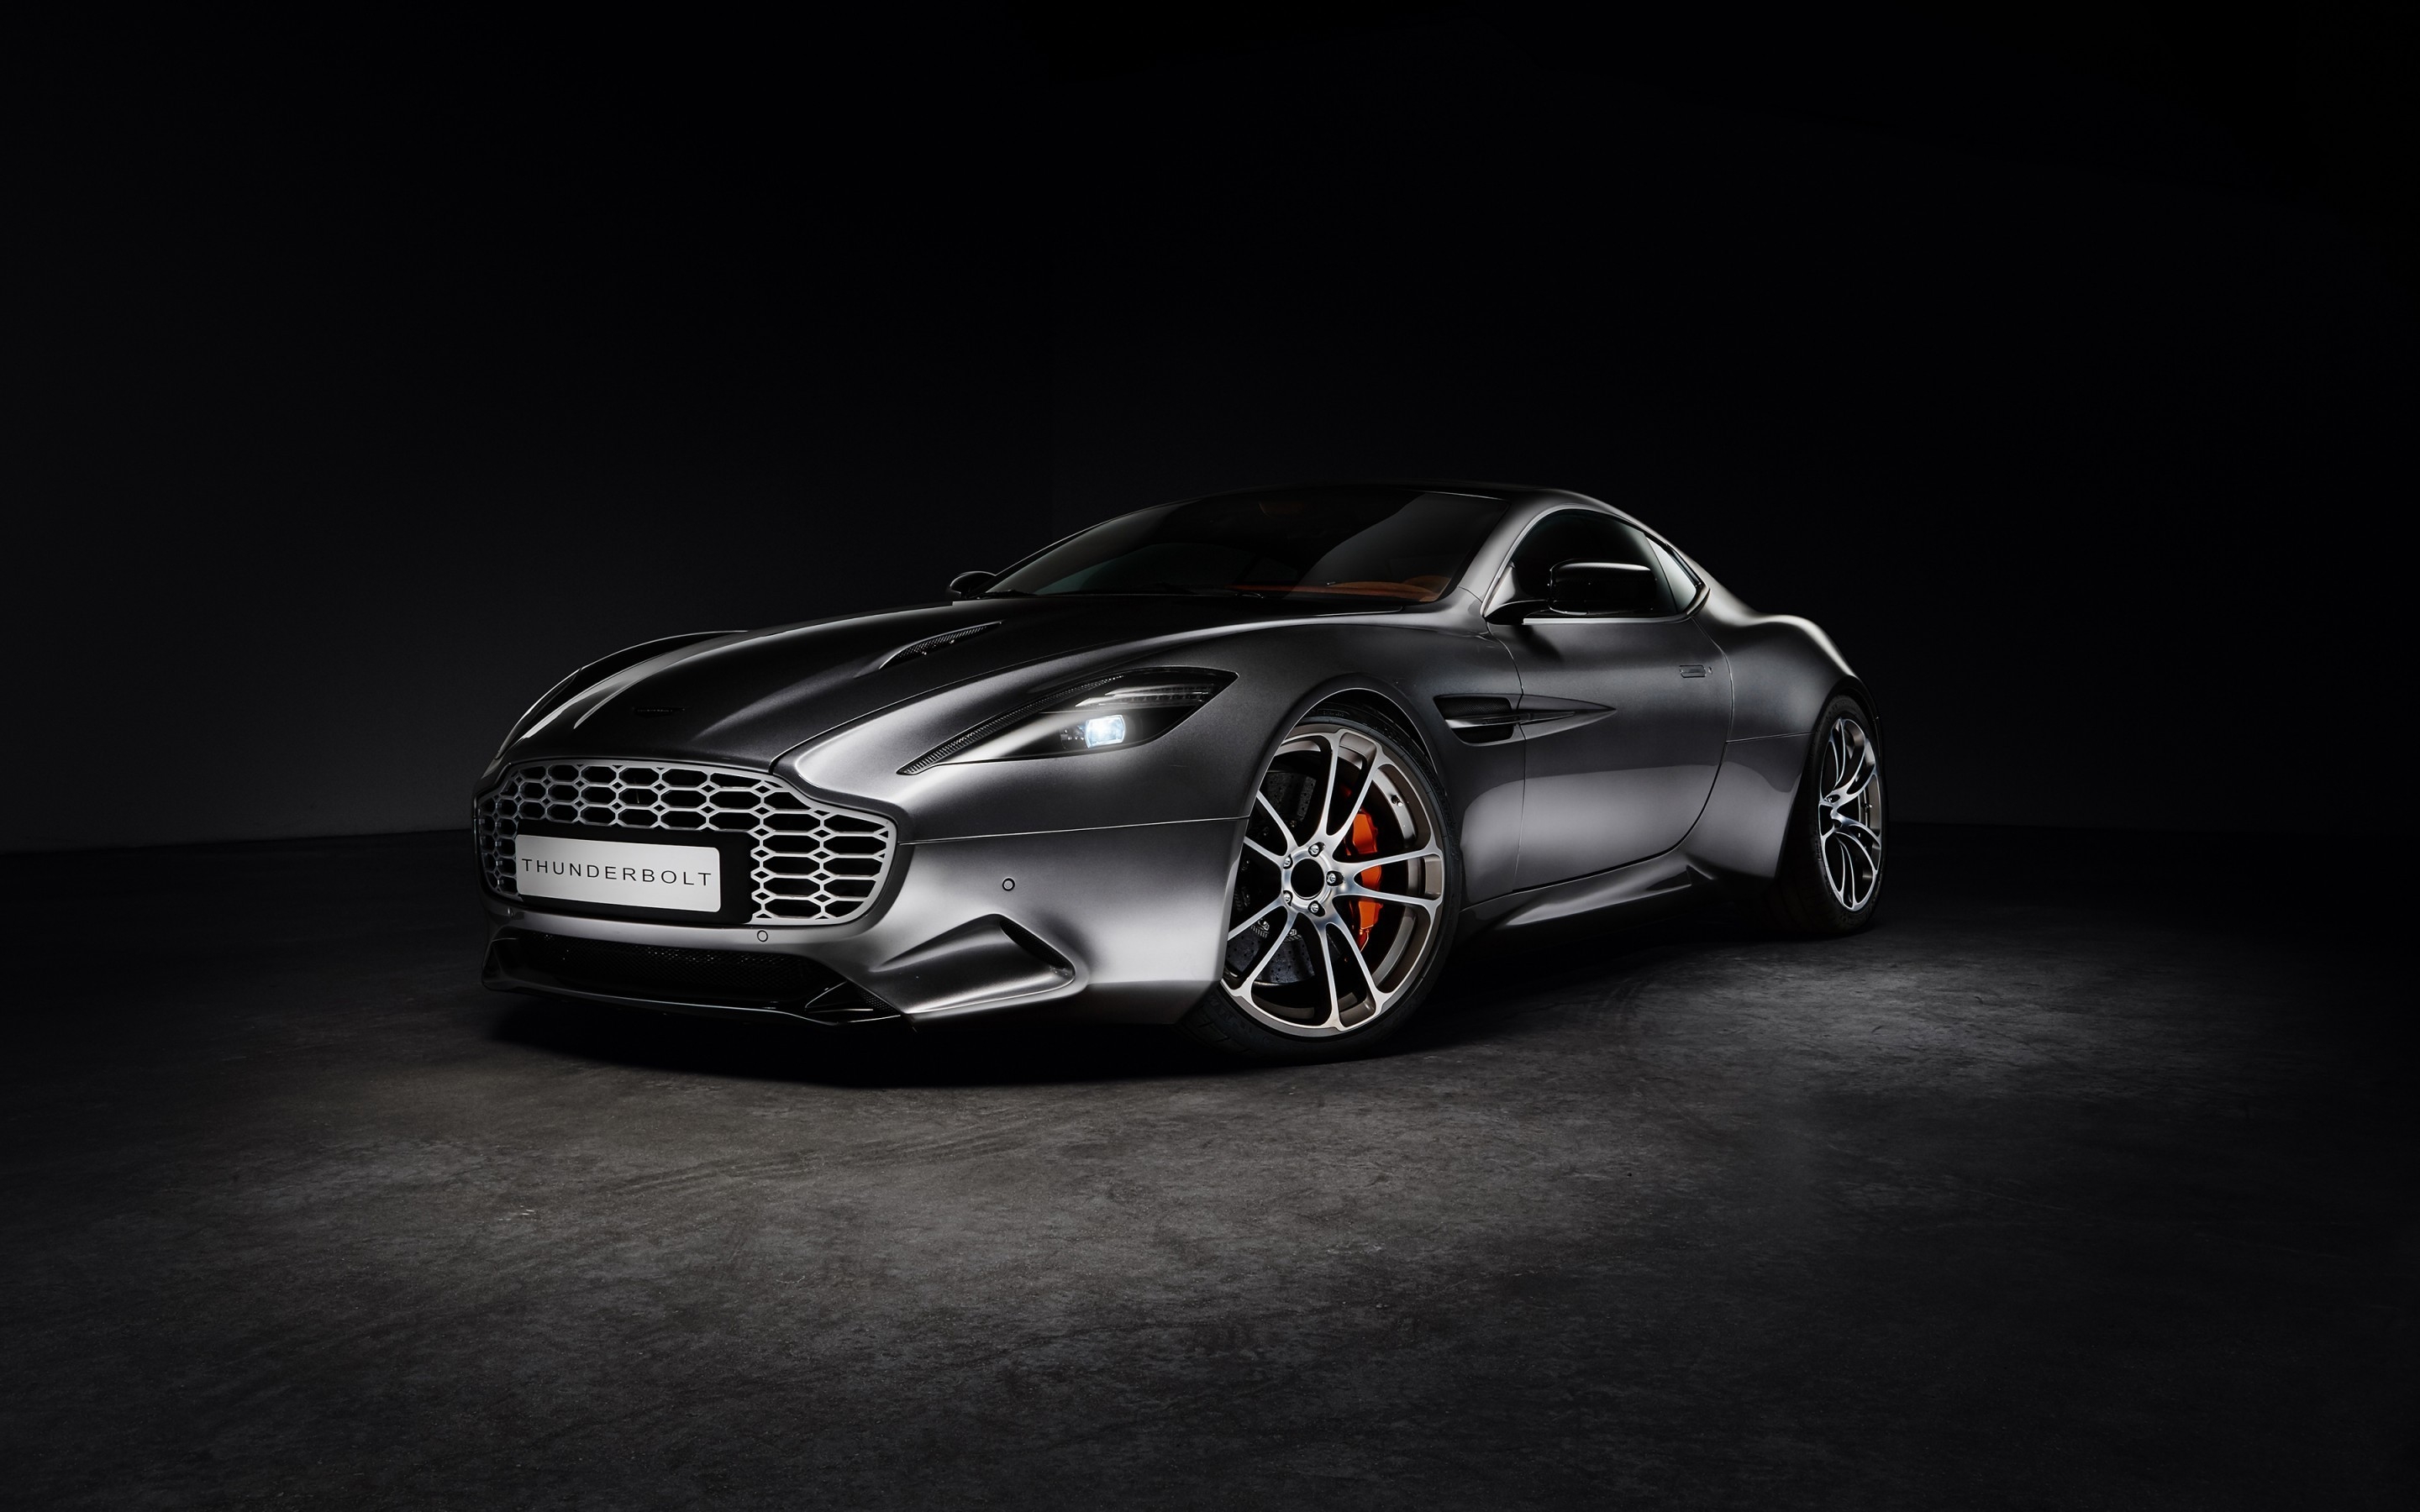 Aston Martin Thunderbolt for 2880 x 1800 Retina Display resolution